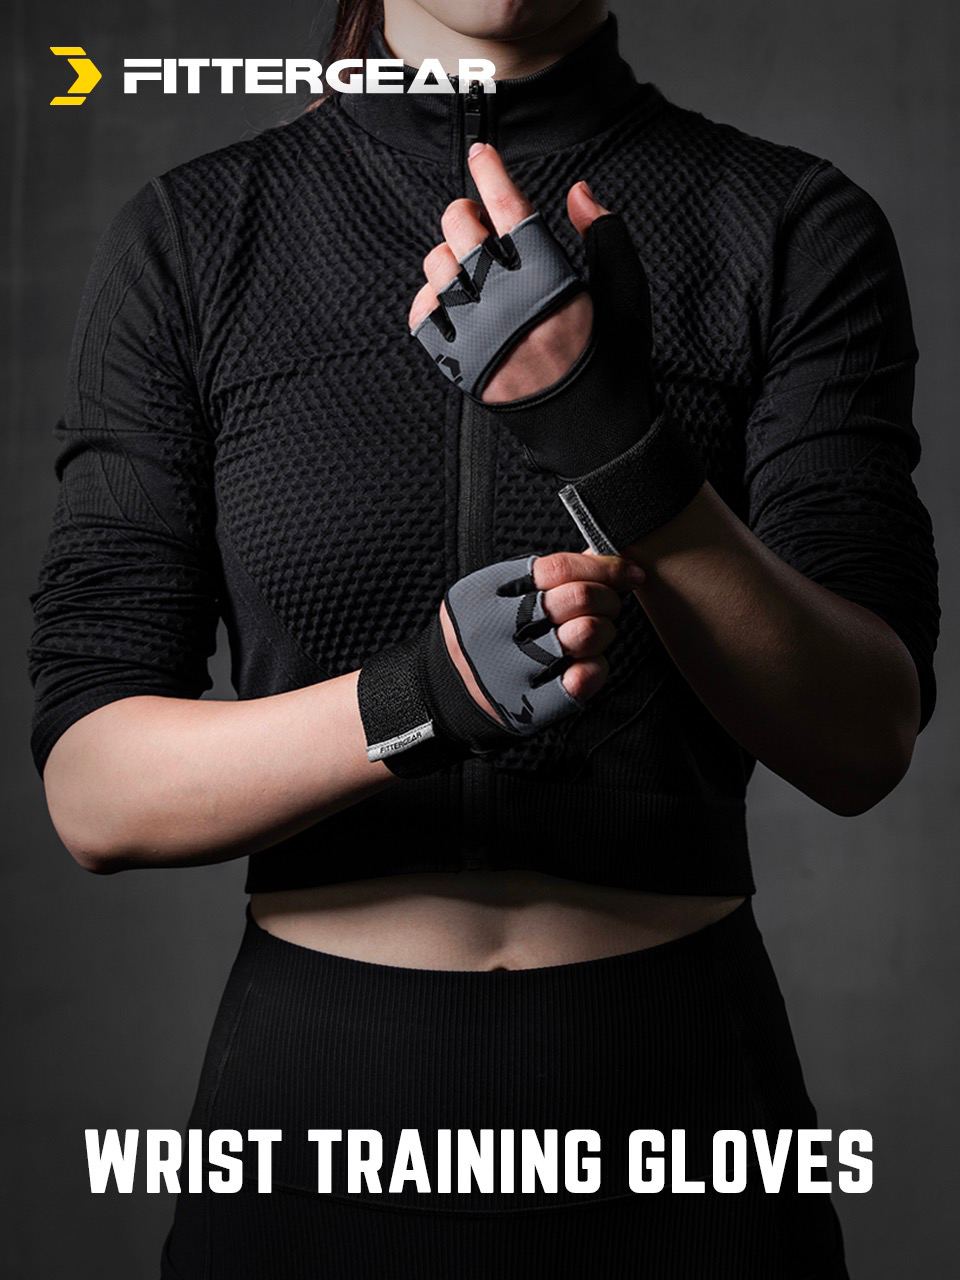 A. Wrist Training Gloves